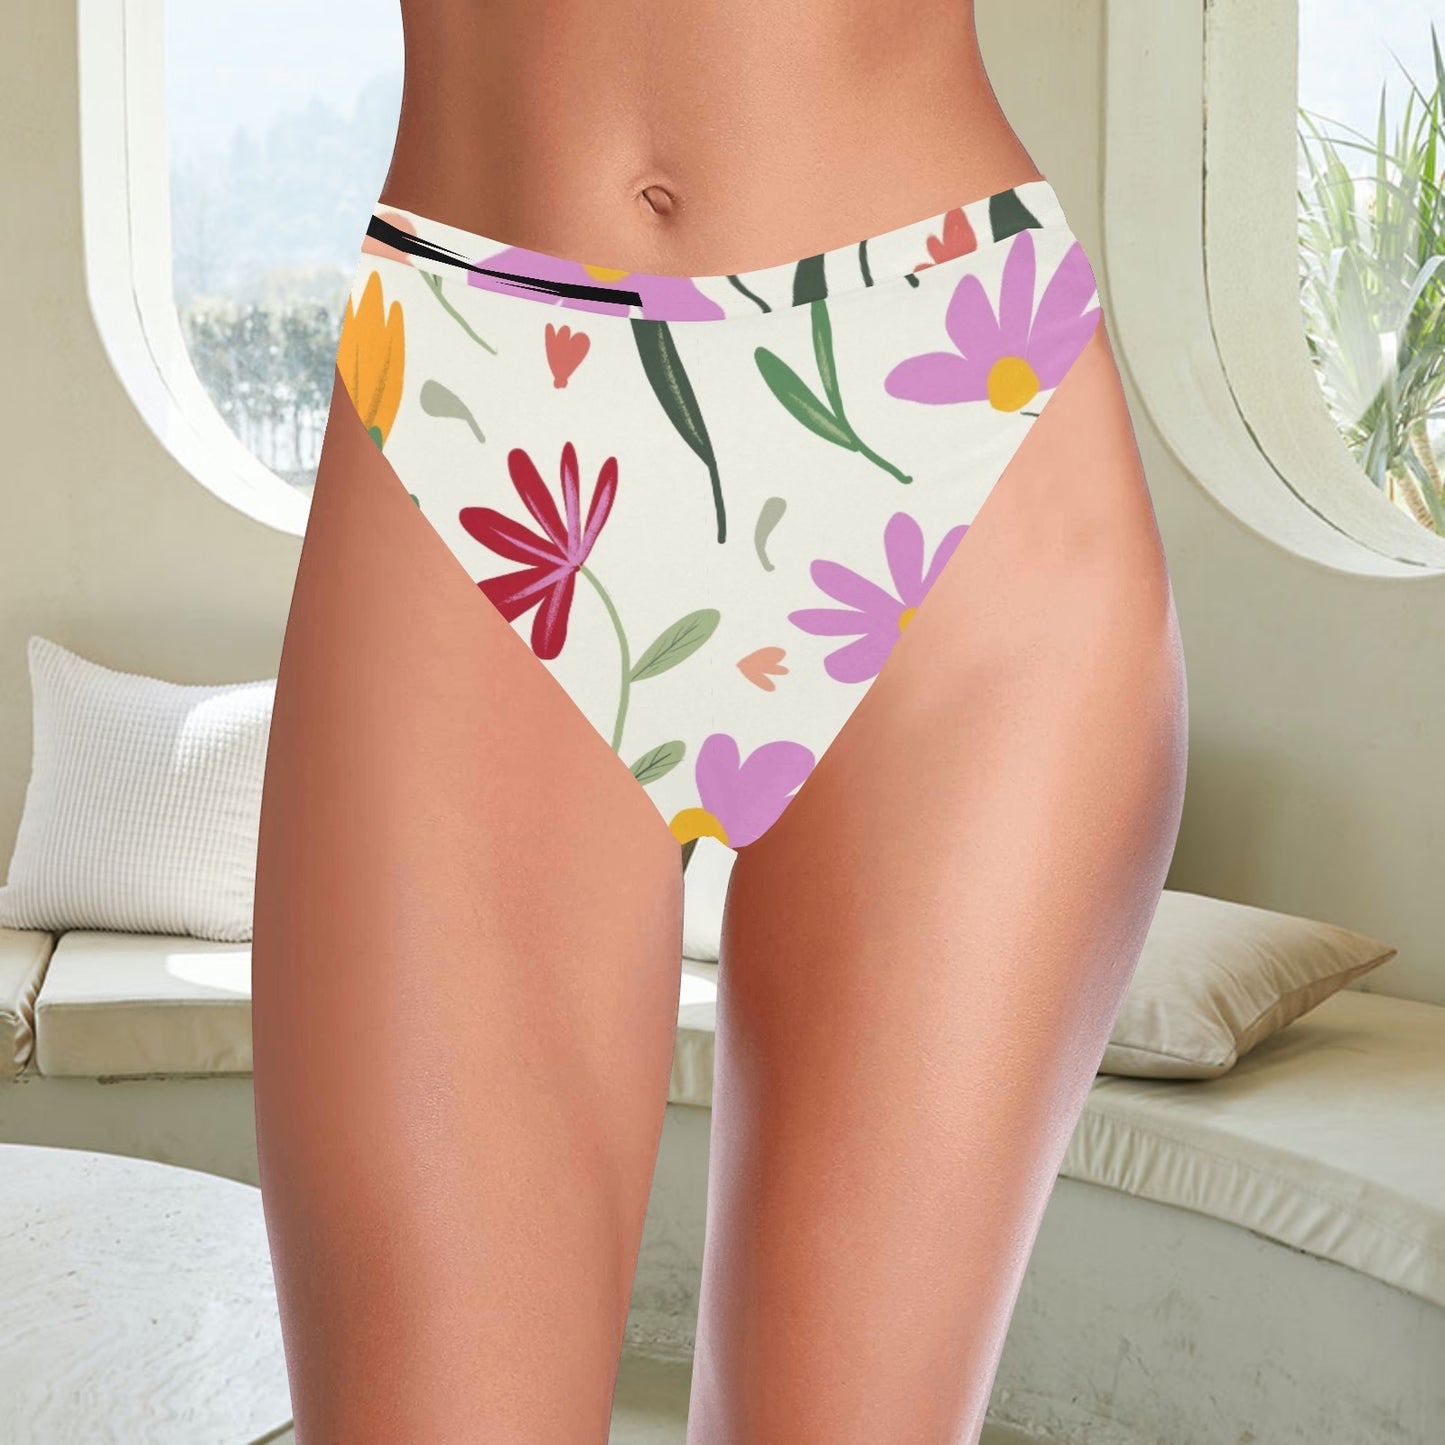 Botanical Flowers High-Waisted High-Cut Bikini Bottom. Pattern hand-painted by the Designer Maria Alejandra Echenique